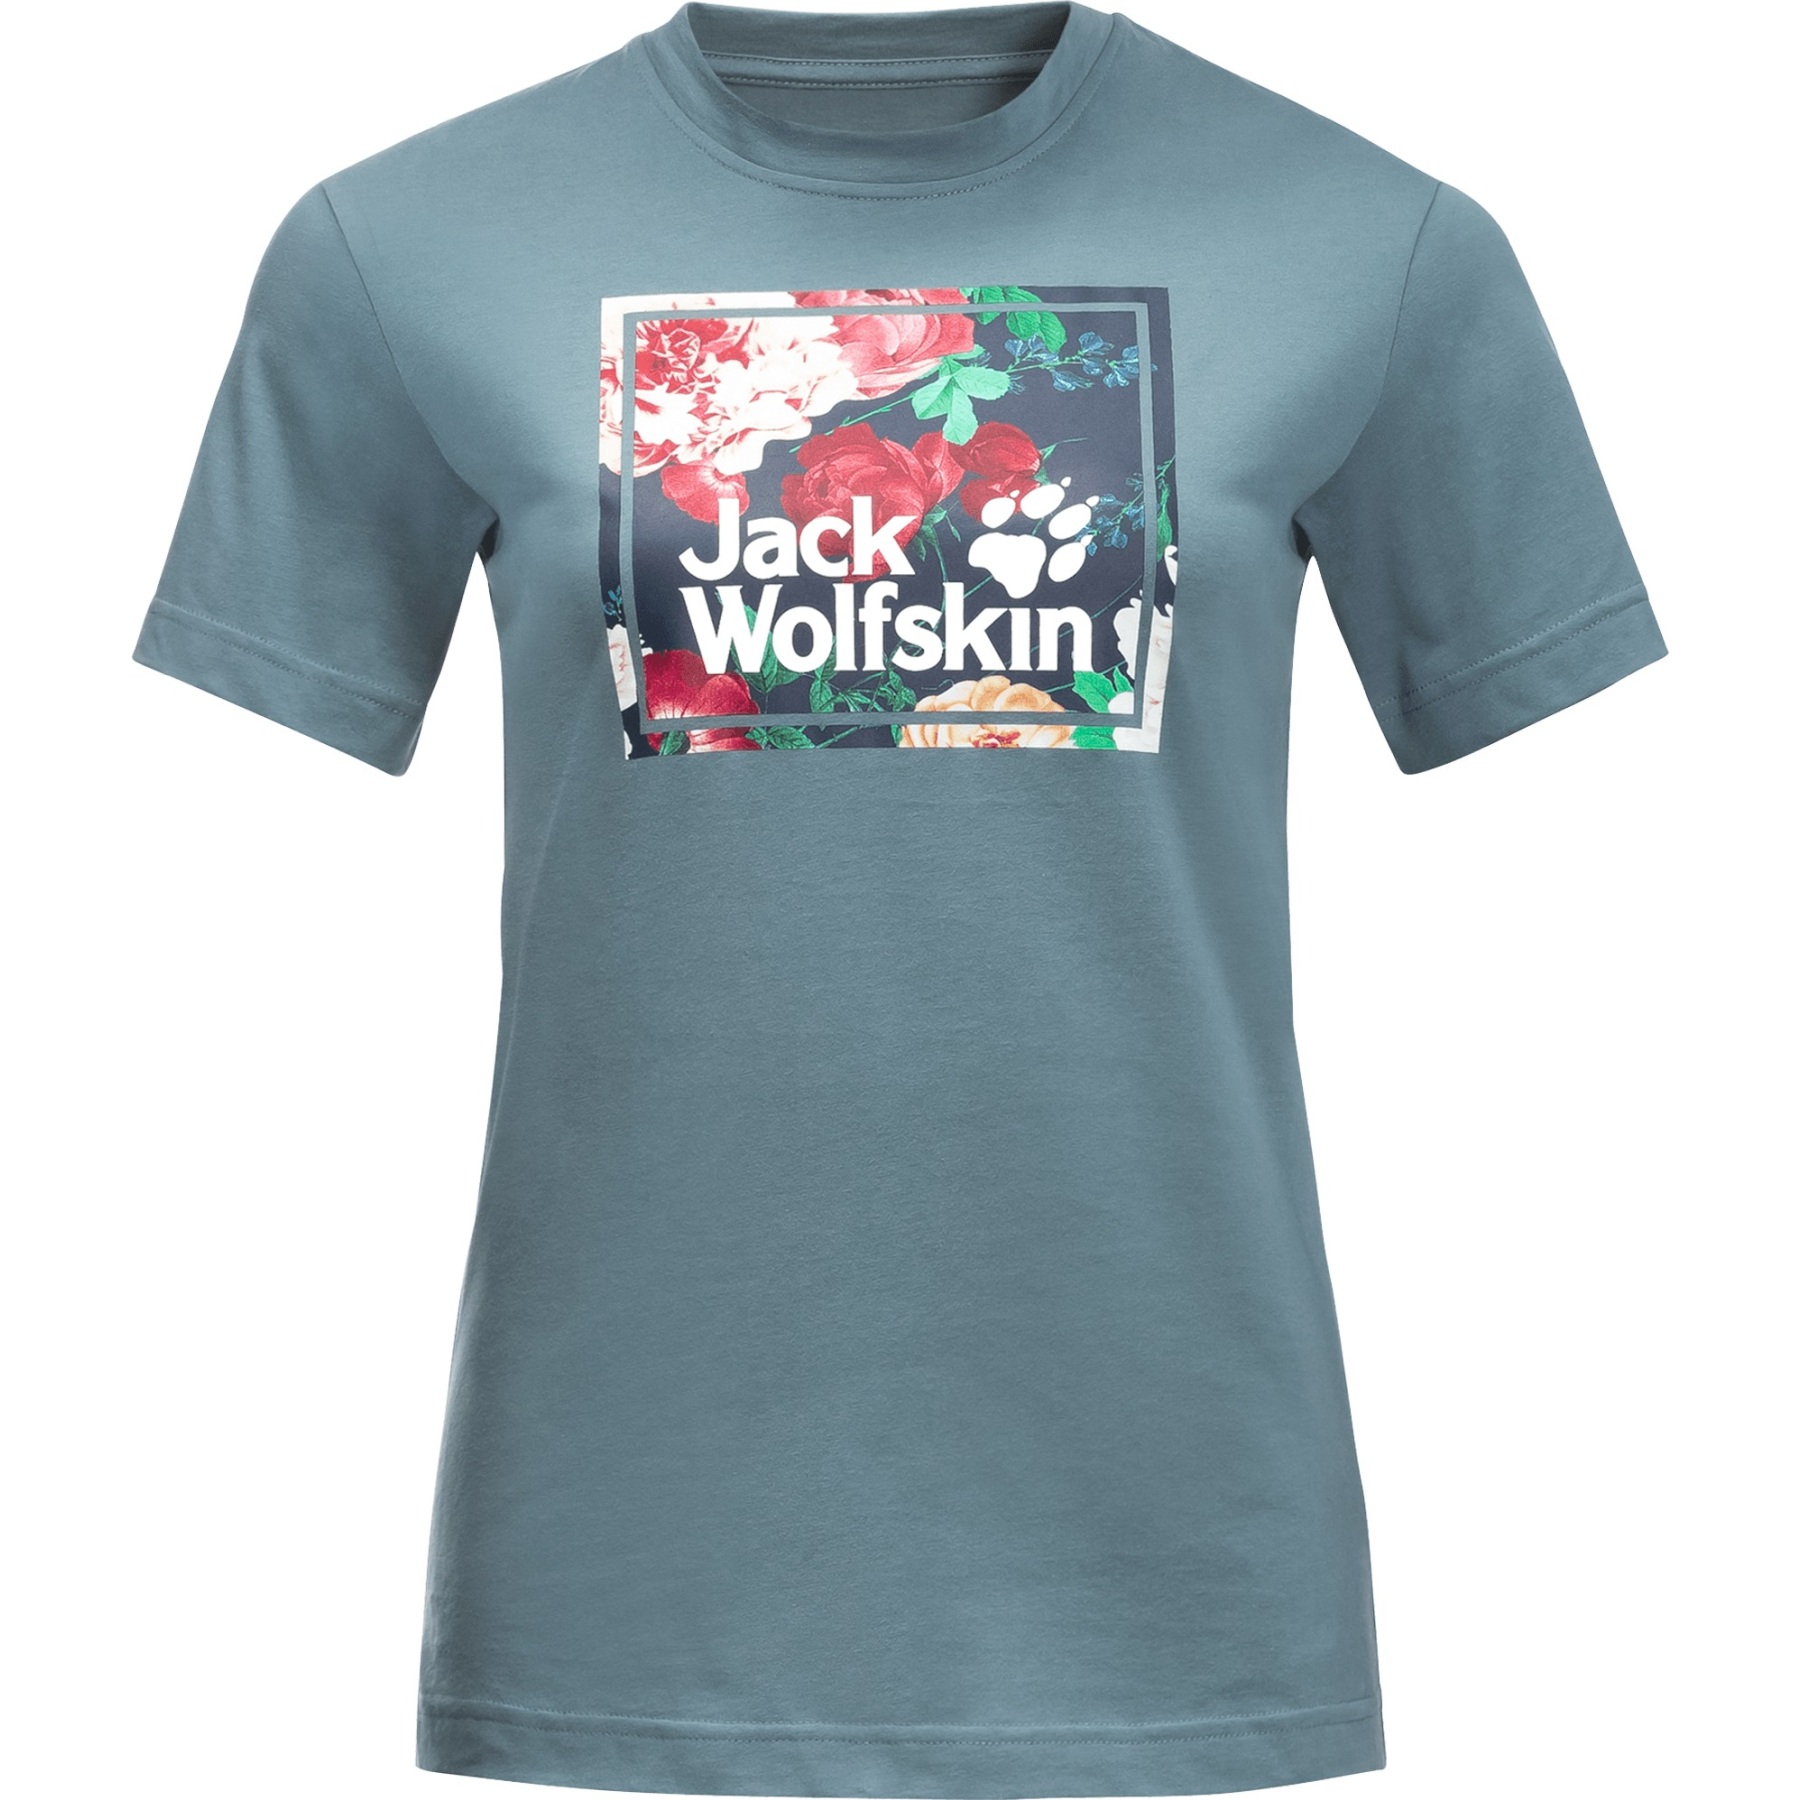 Picture of Jack Wolfskin Flower Logo T-Shirt Women - teal grey